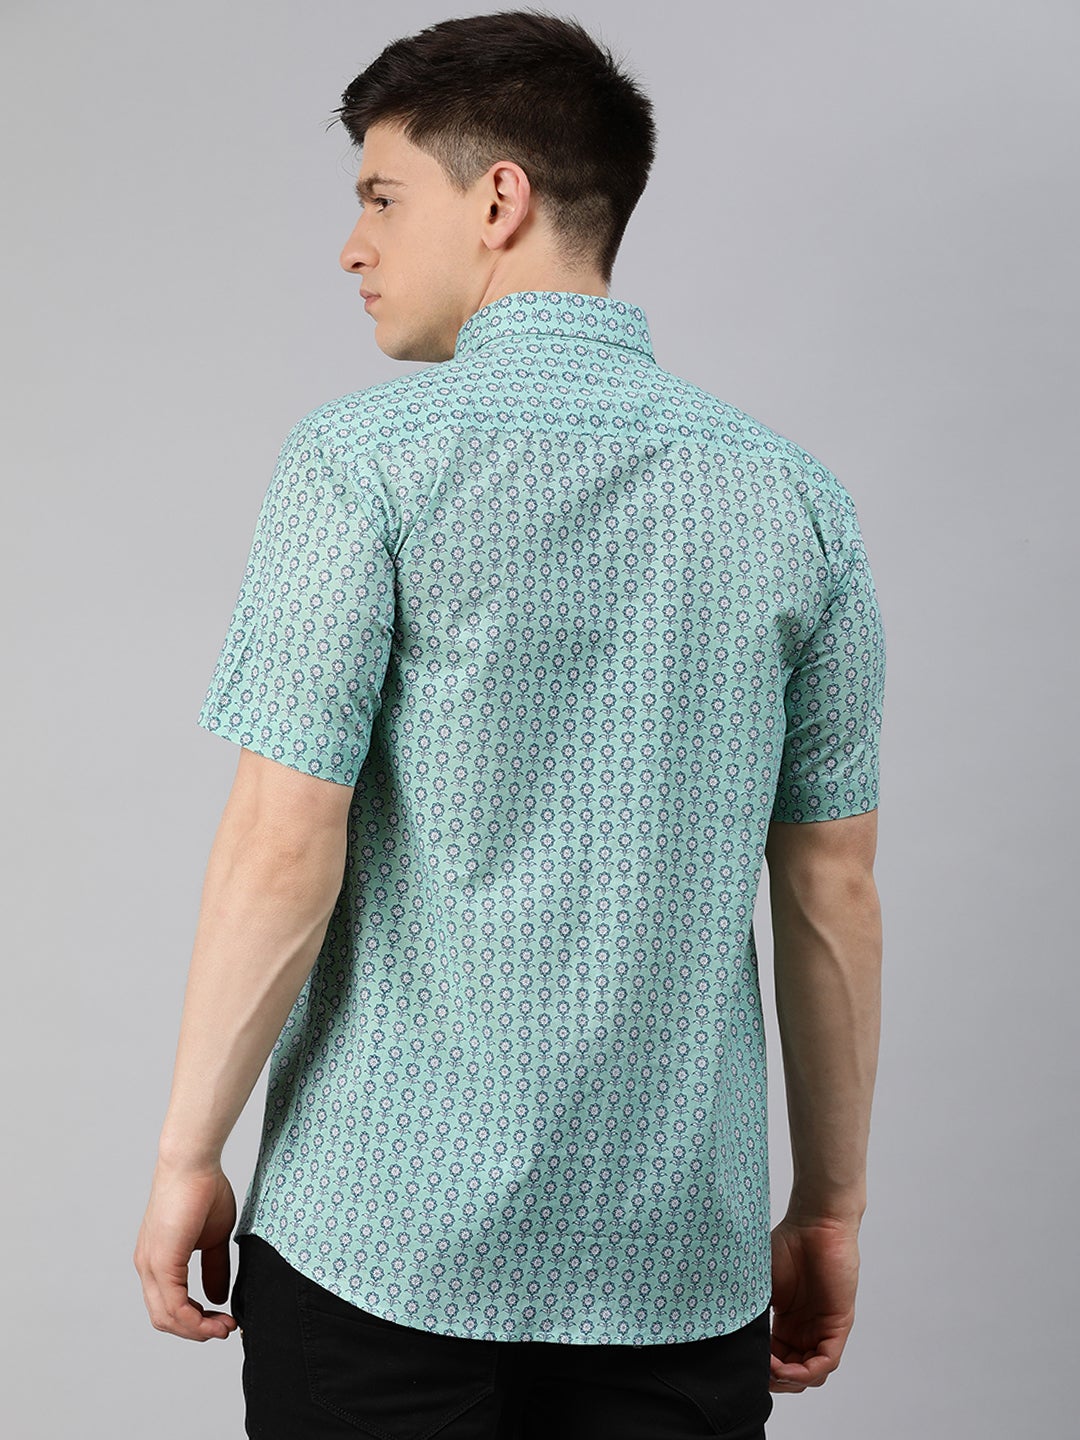 Sea Green Cotton Short Sleeves Shirts For Men